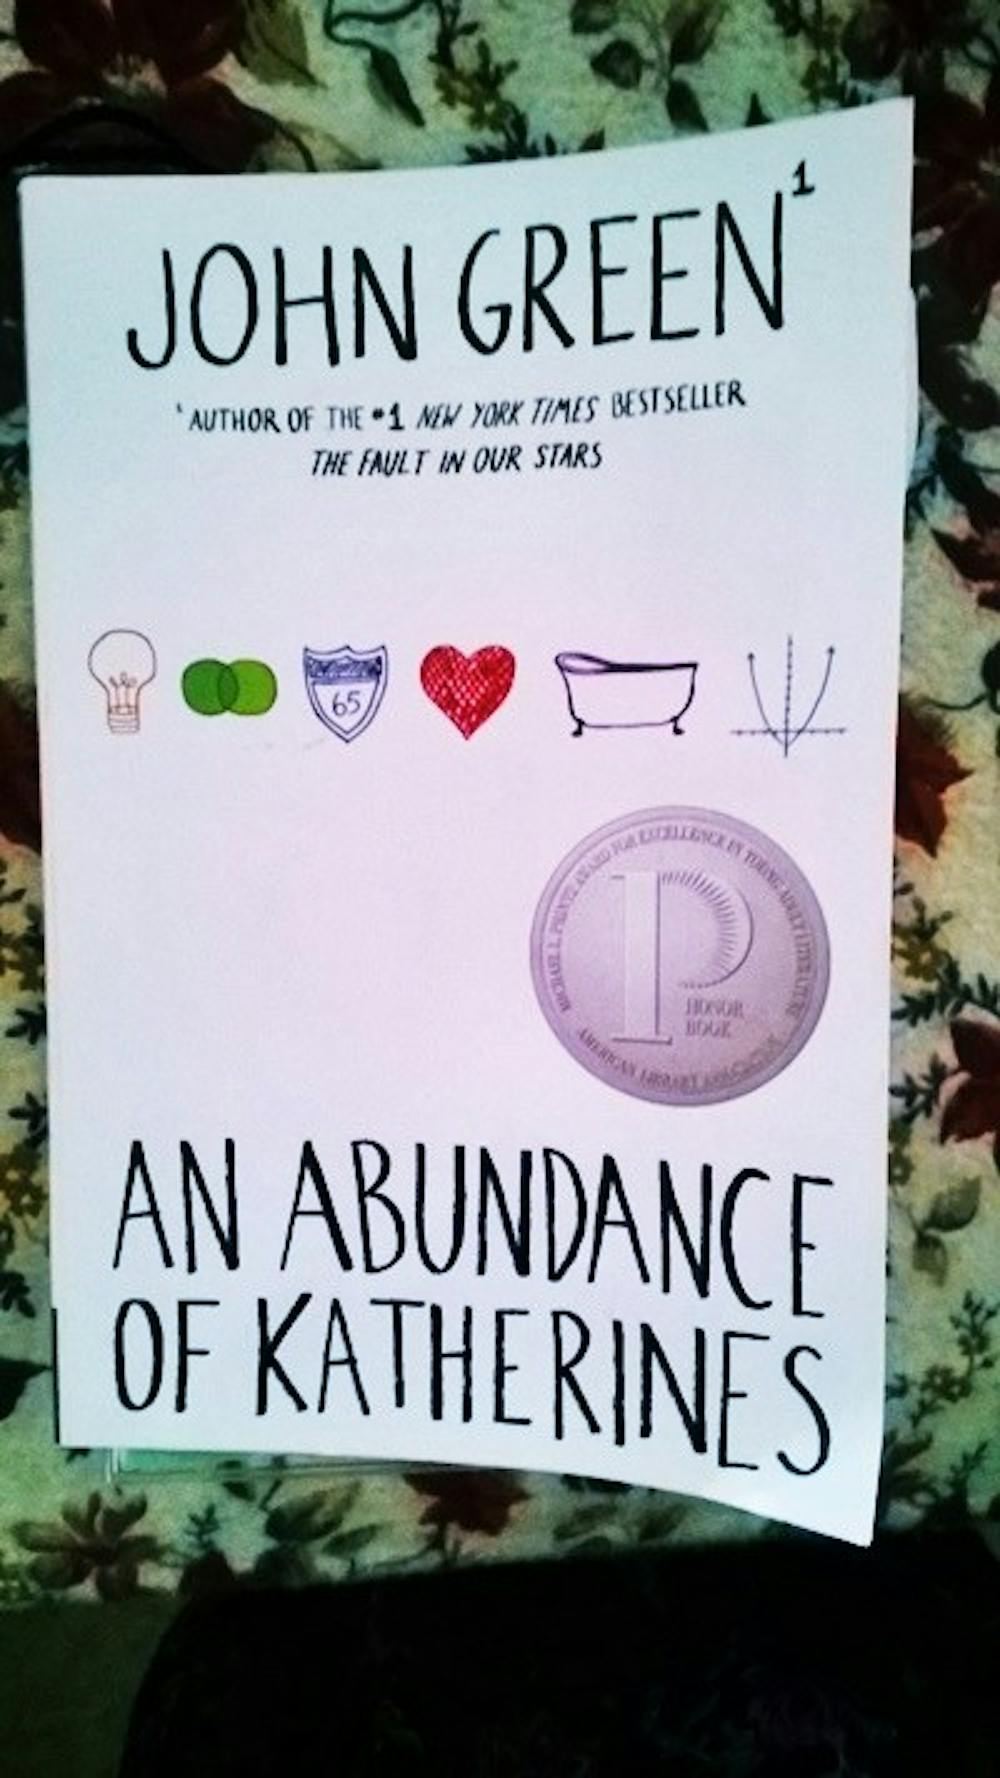 "An Abundance of Katherines" by John Green Photo credit: Marie Rabusa